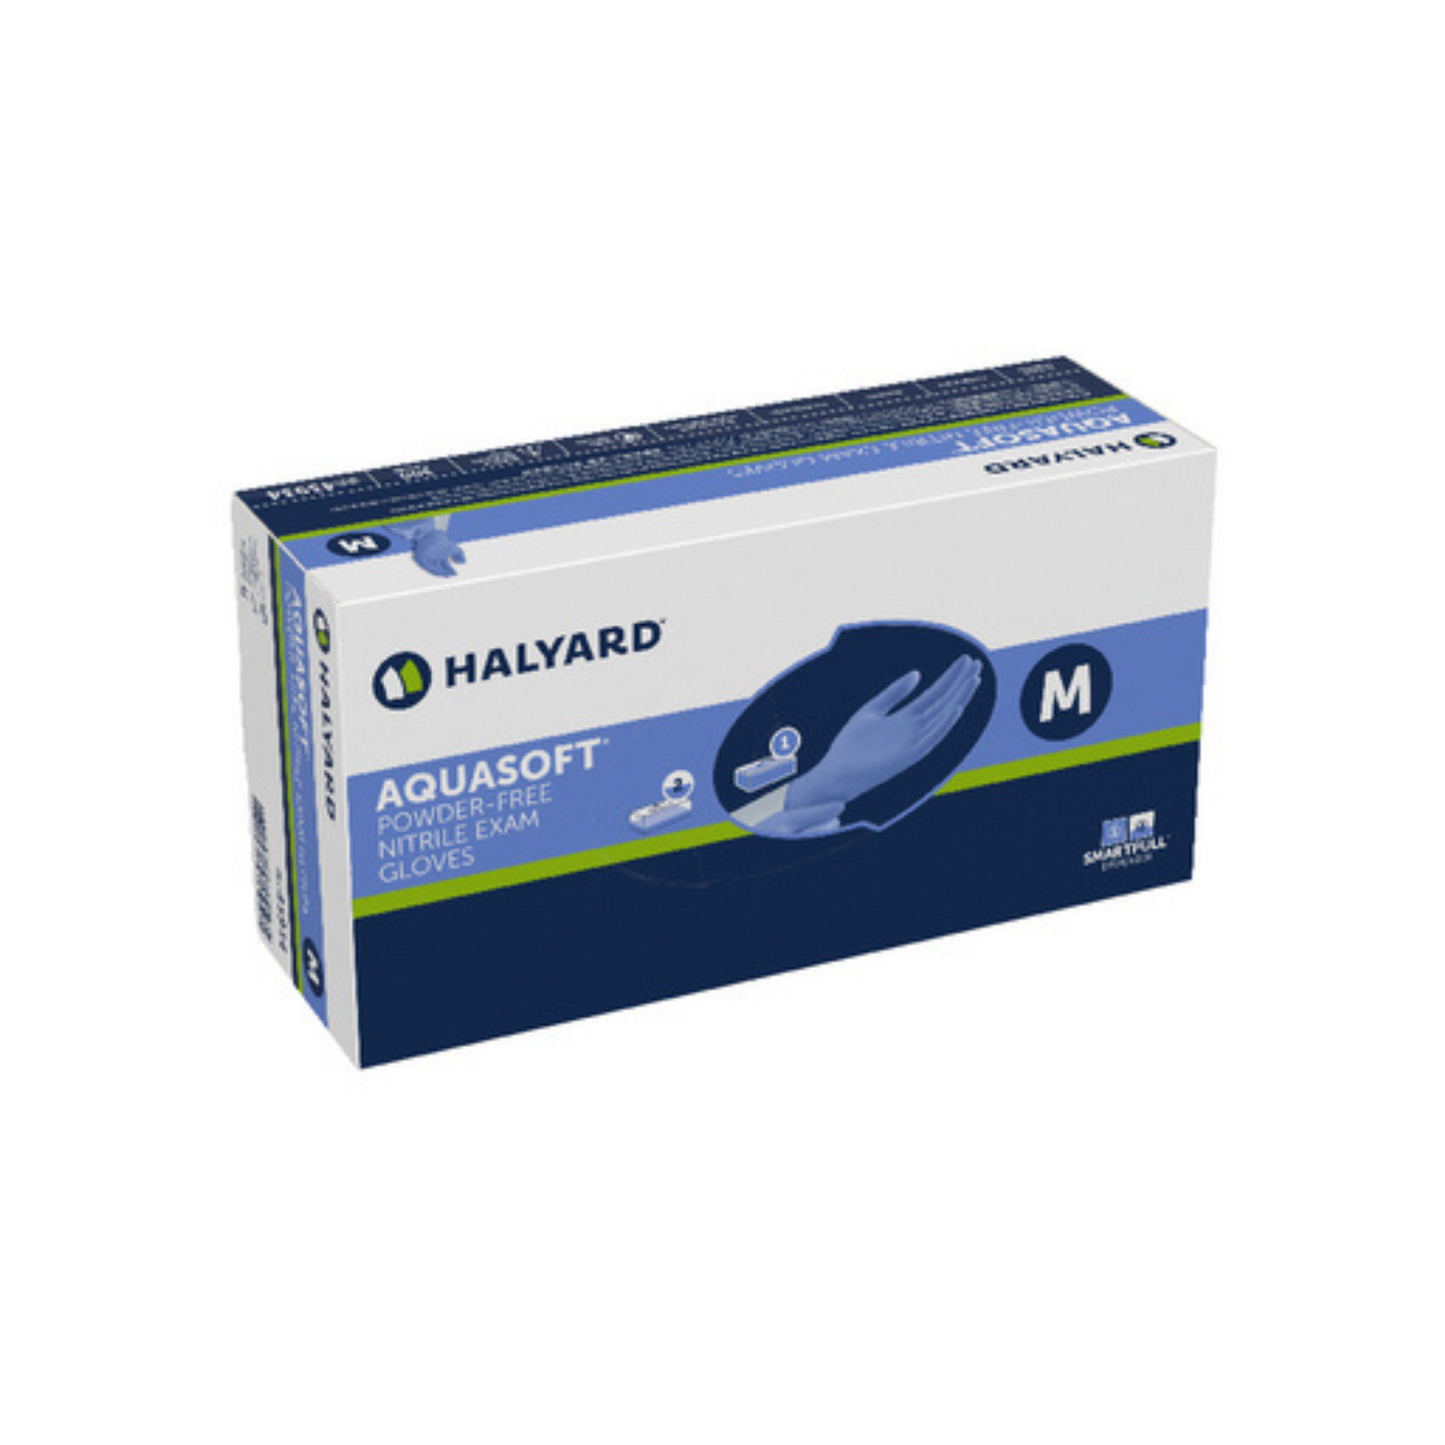 Halyard Aquasoft Nitrile Exam Gloves - M - Box (300pc)